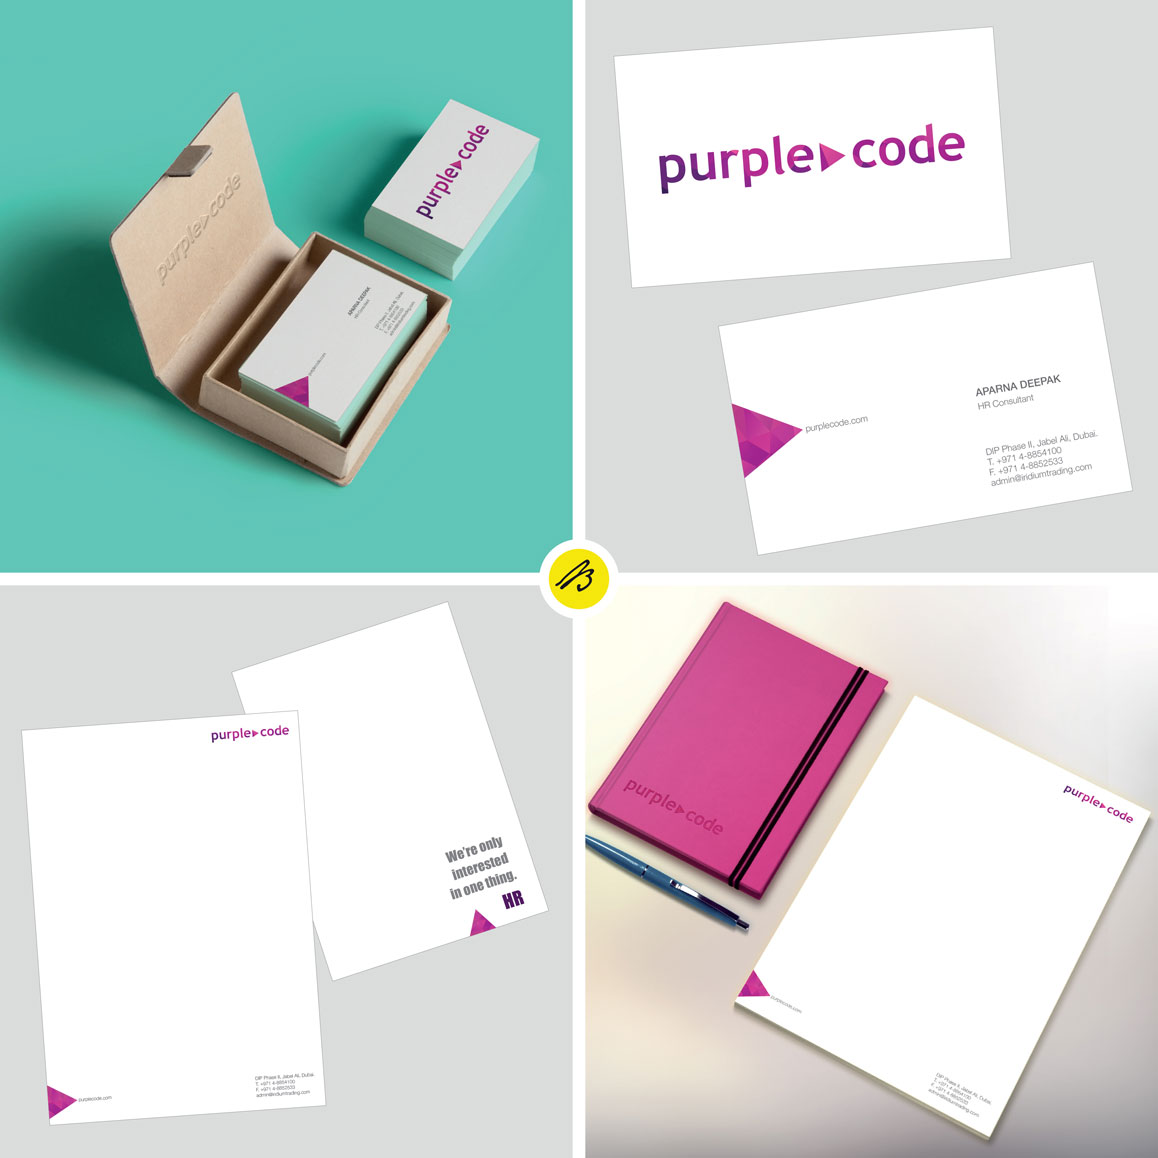 purplecode